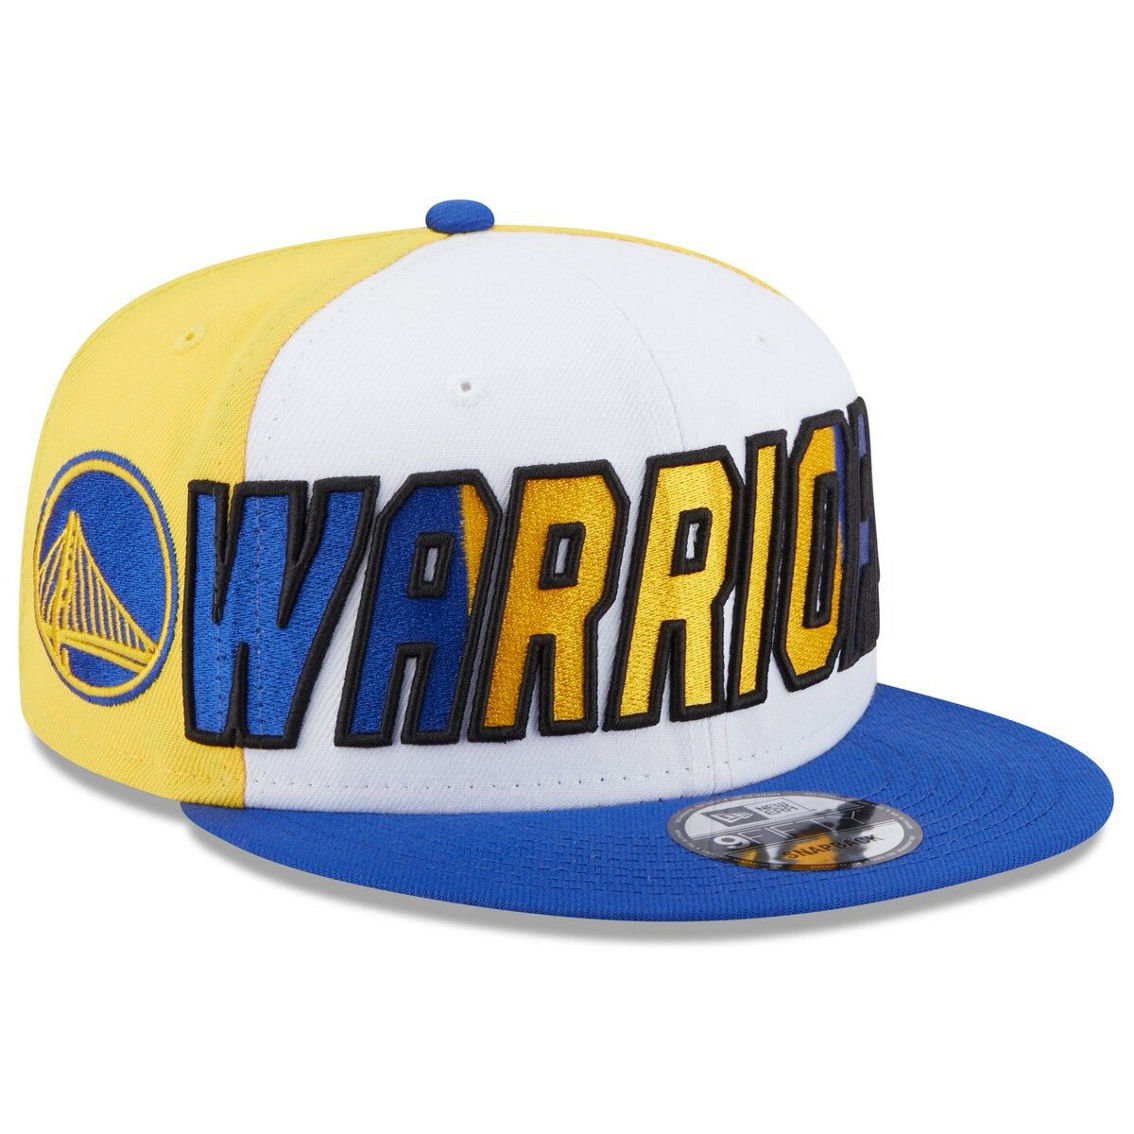 New Era Men's White/Royal Golden State Warriors Back Half 9FIFTY Snapback Hat - Image 2 of 4